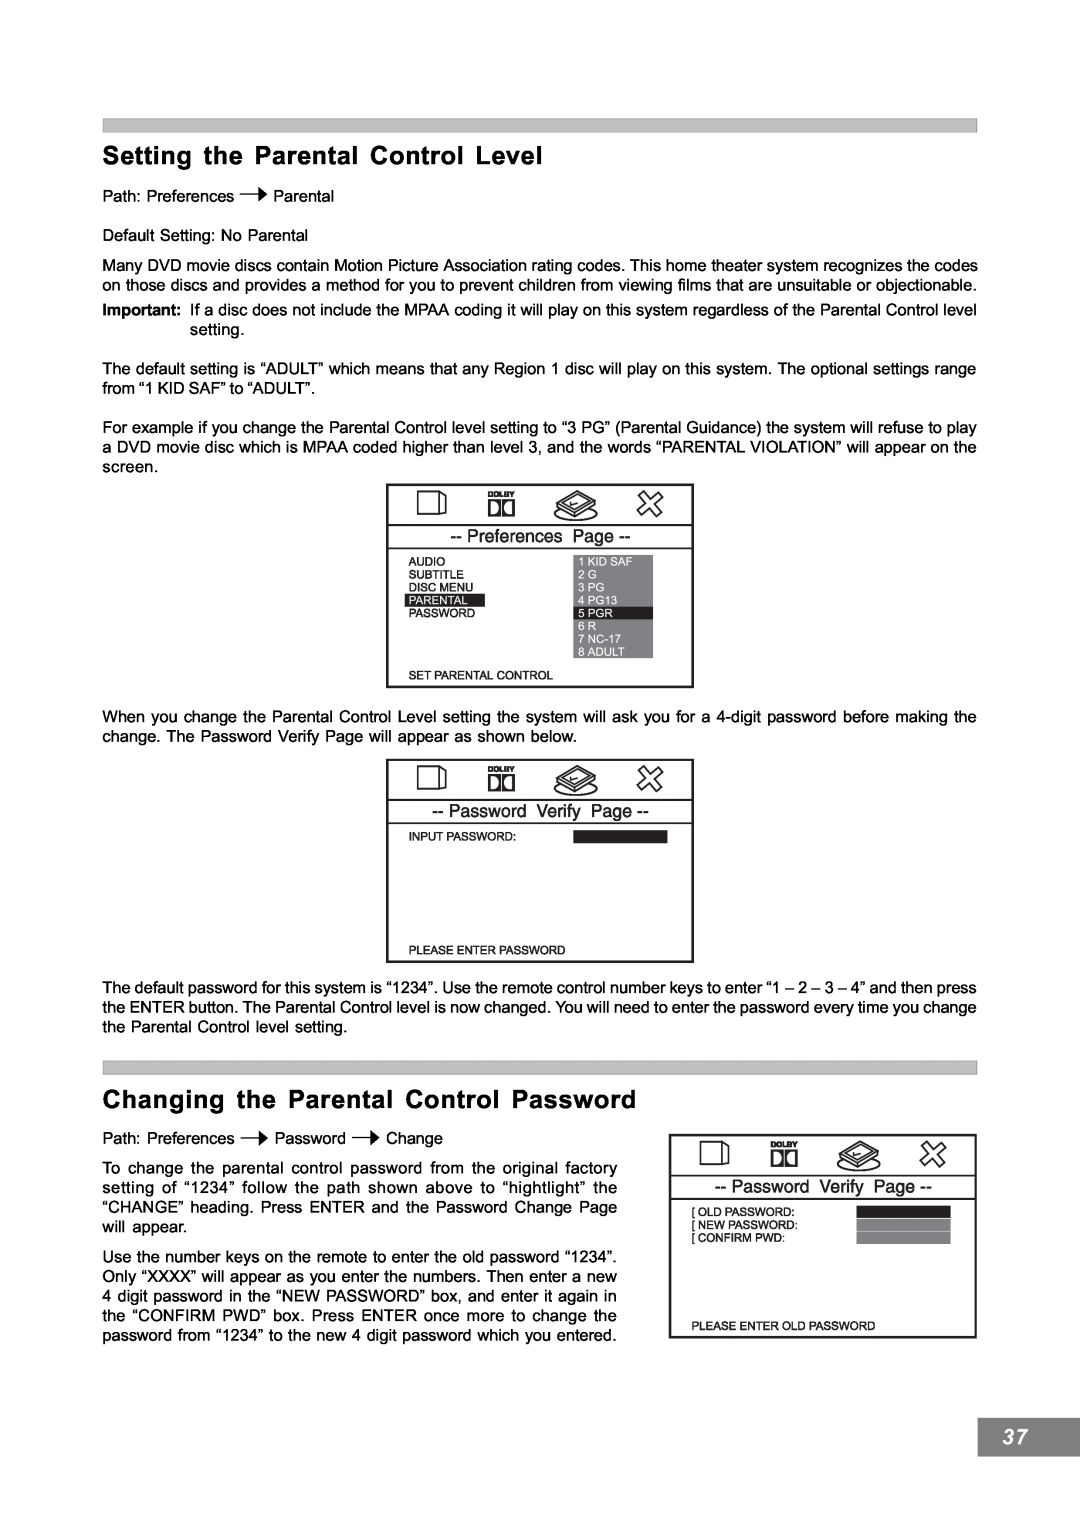 Emerson AV101 manual Setting the Parental Control Level, Changing the Parental Control Password 